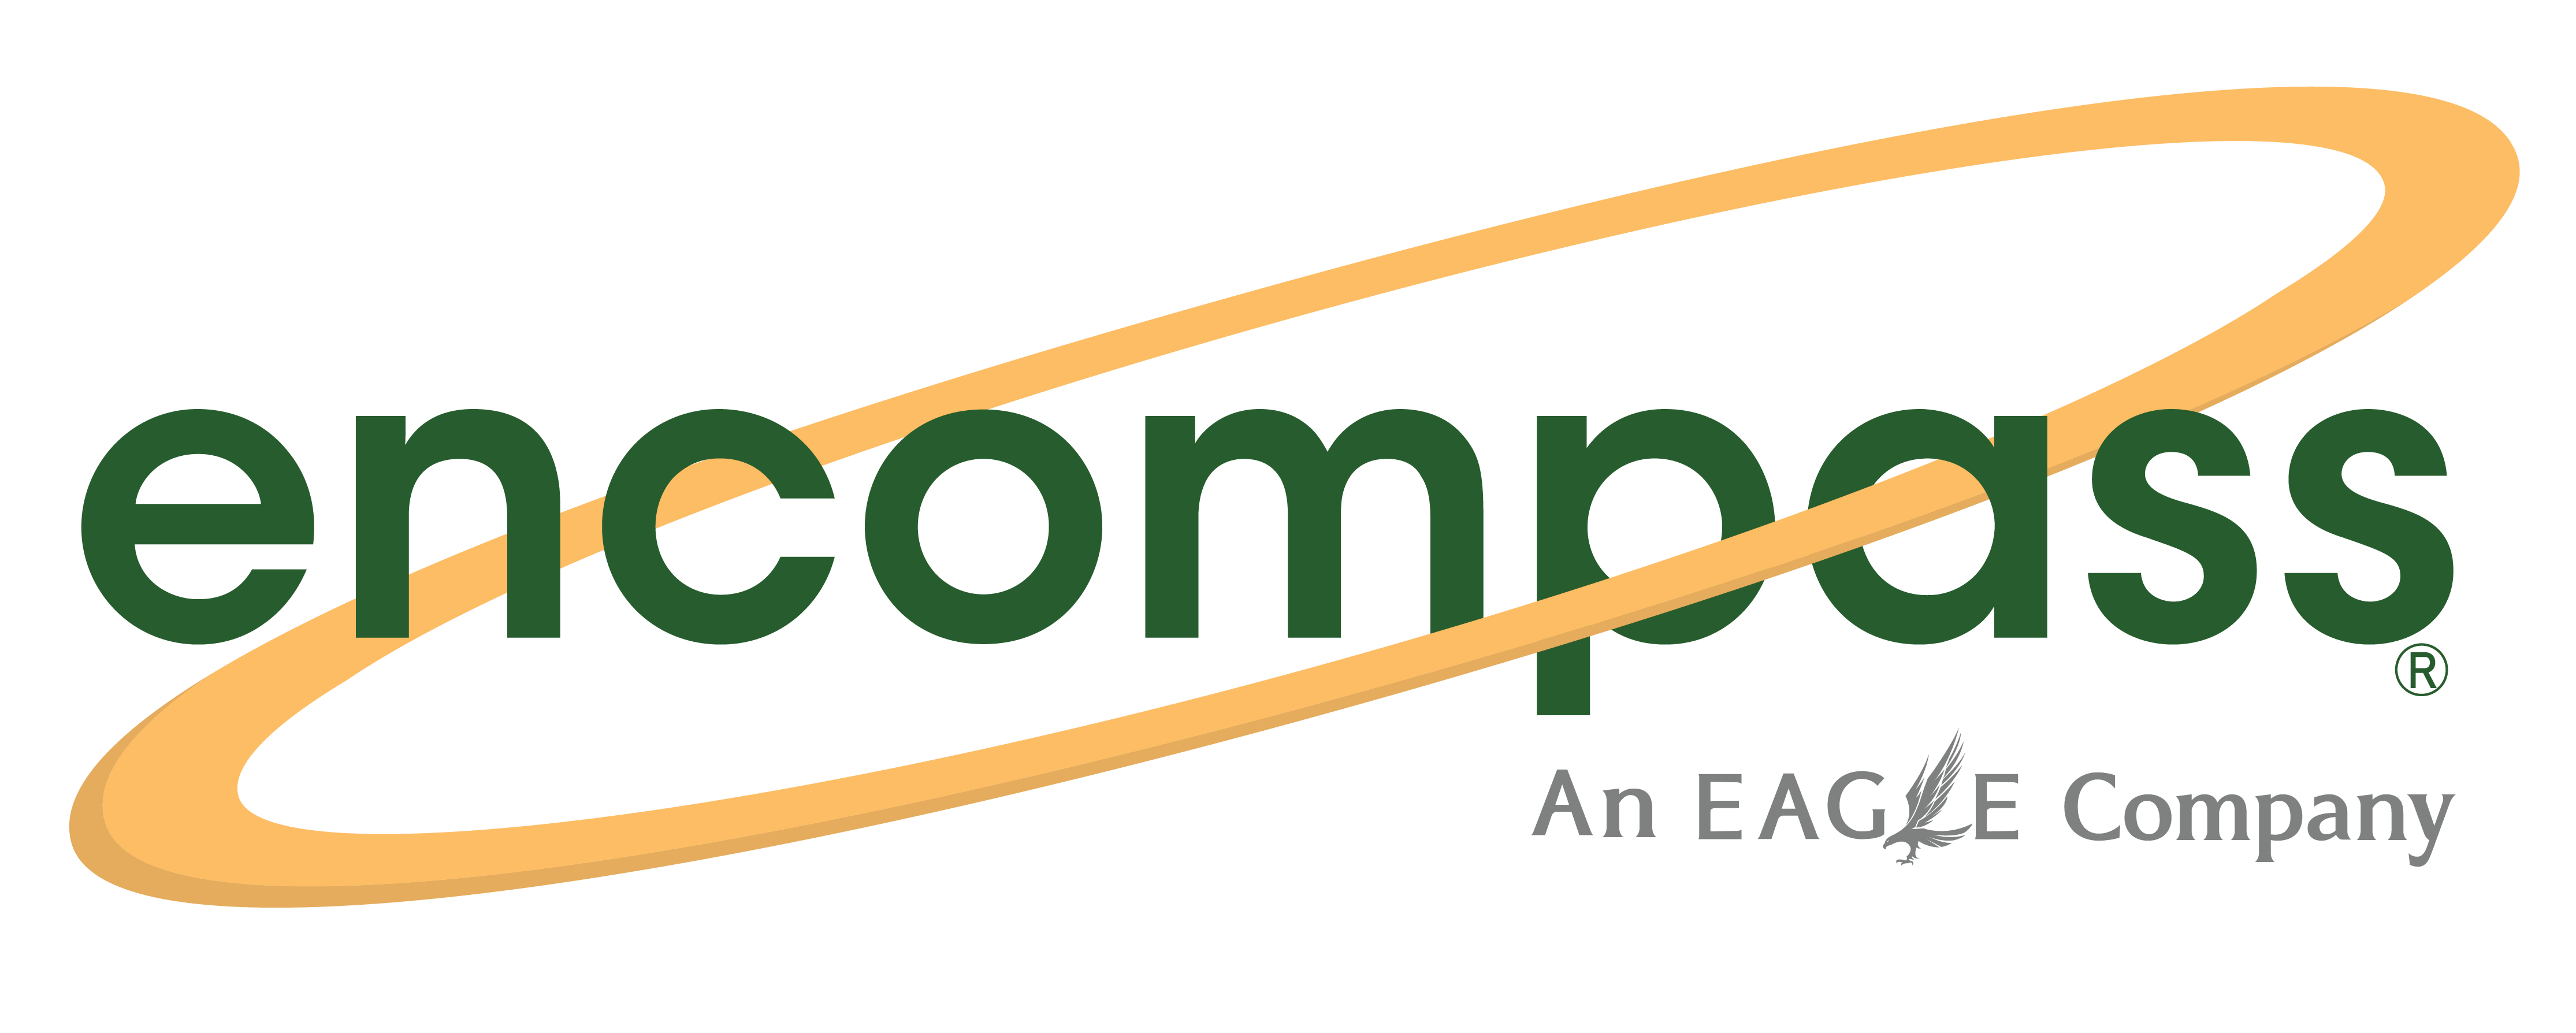 Encompass-An-EAGLE-Company-R-01